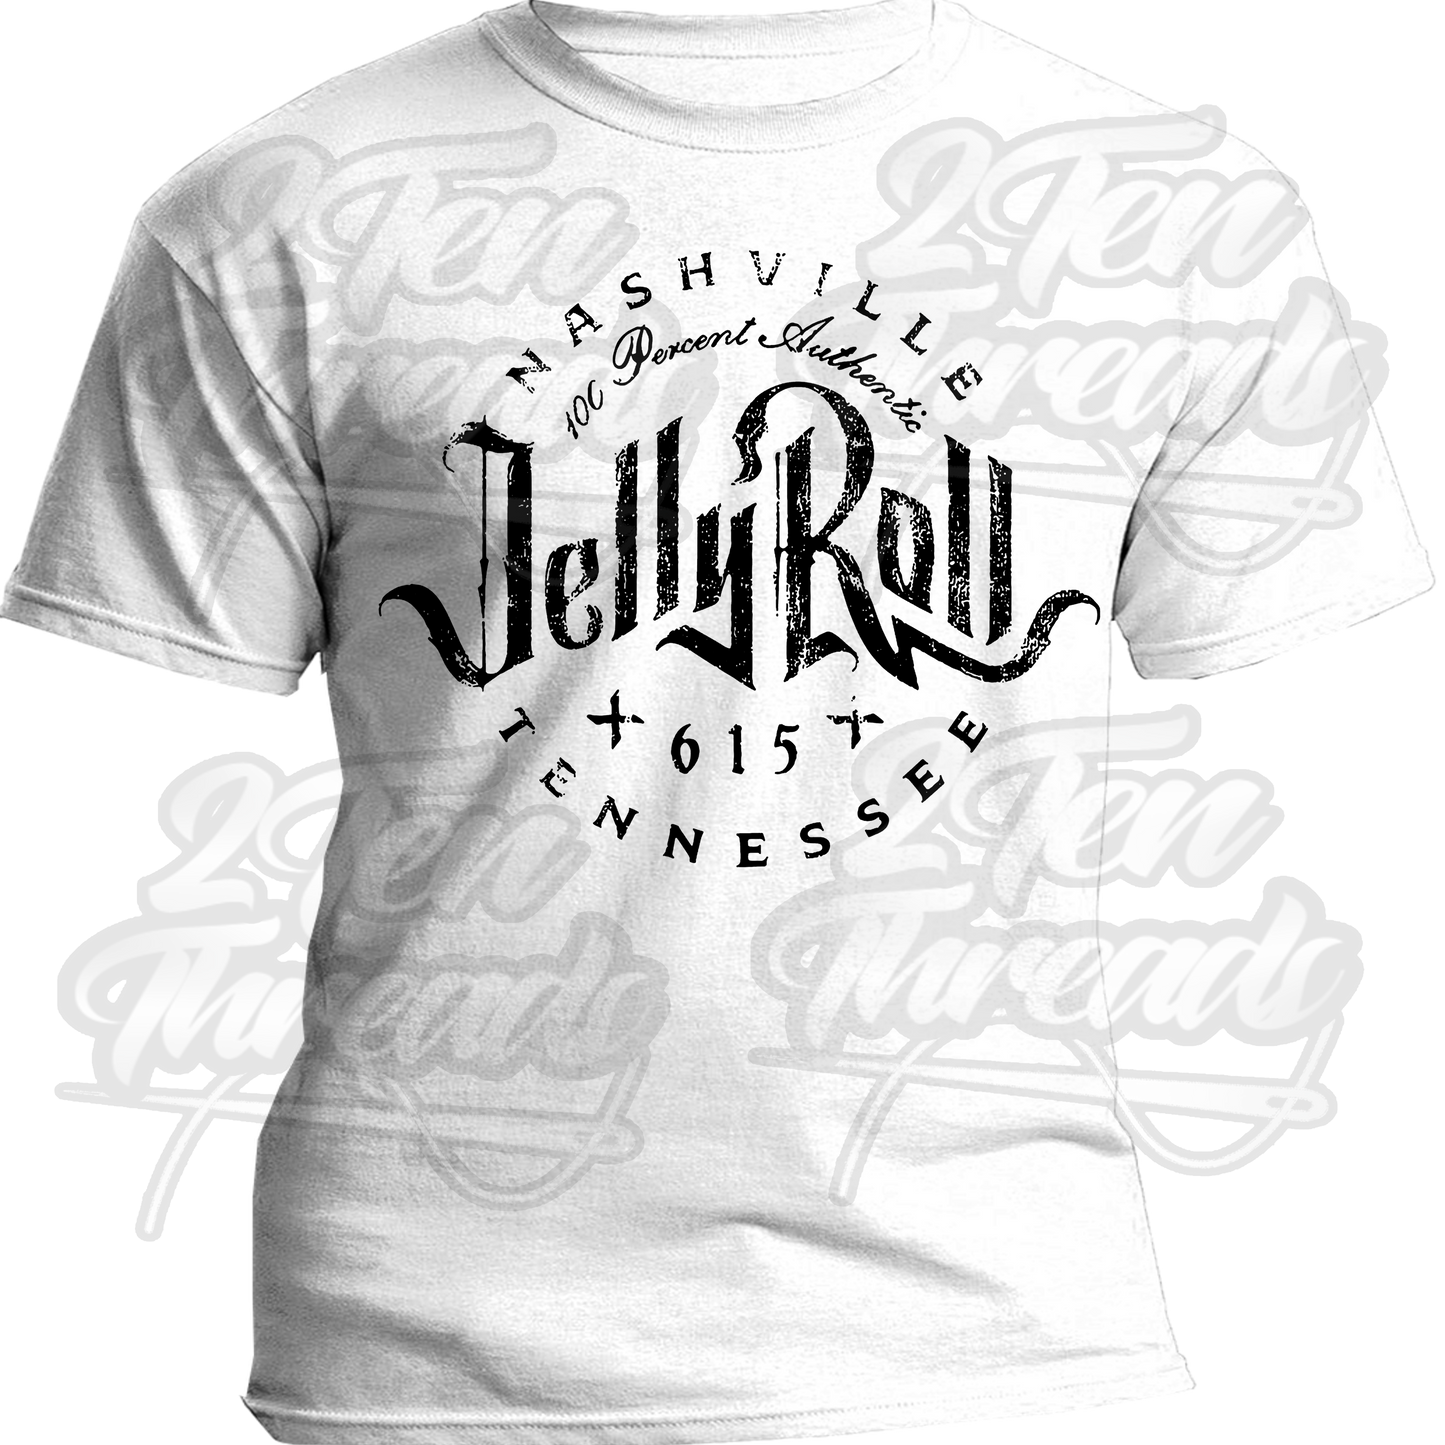 Nashville Jelly Roll shirt